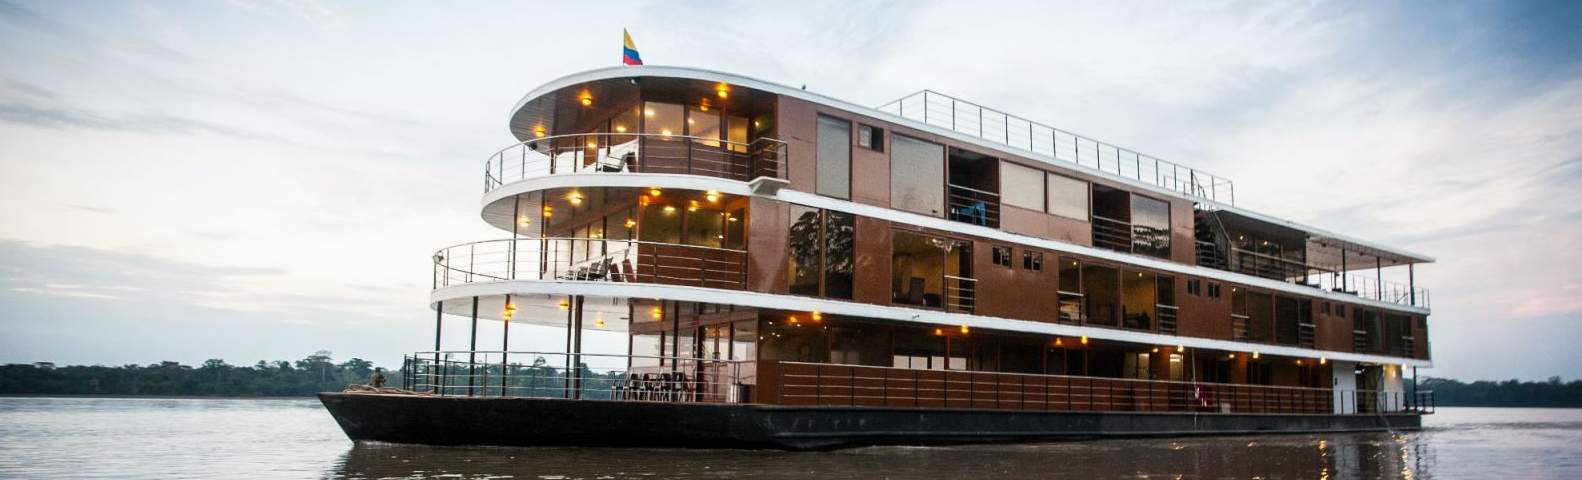 anakonda amazon river cruise